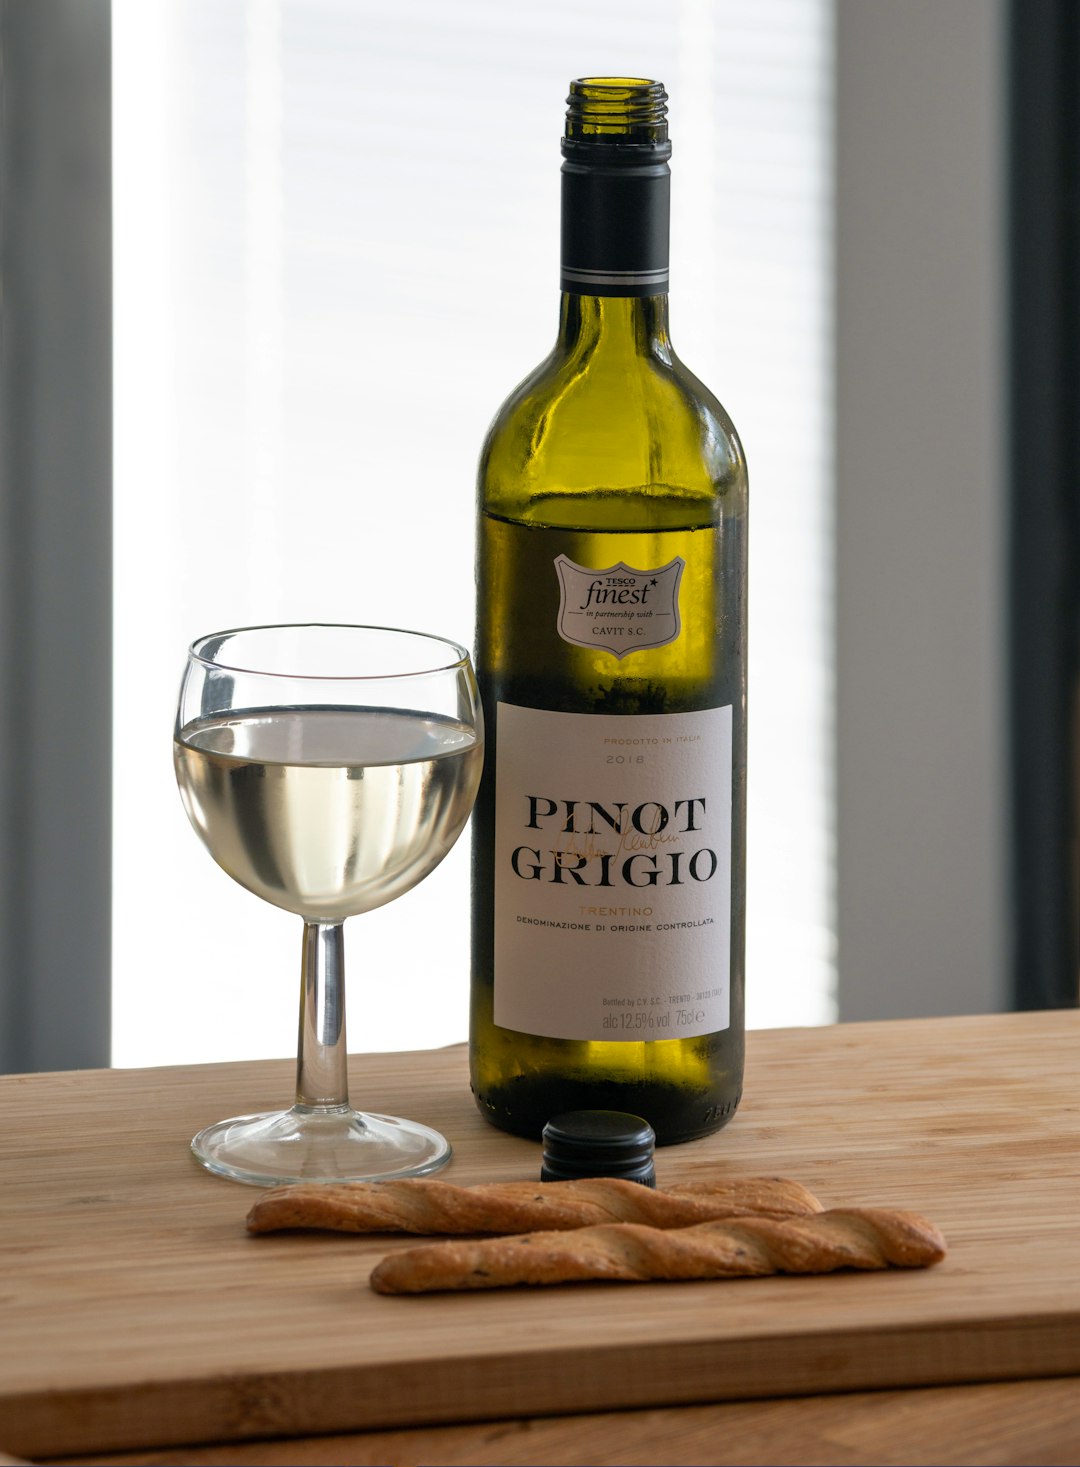 pinot grigio bottle beside glass